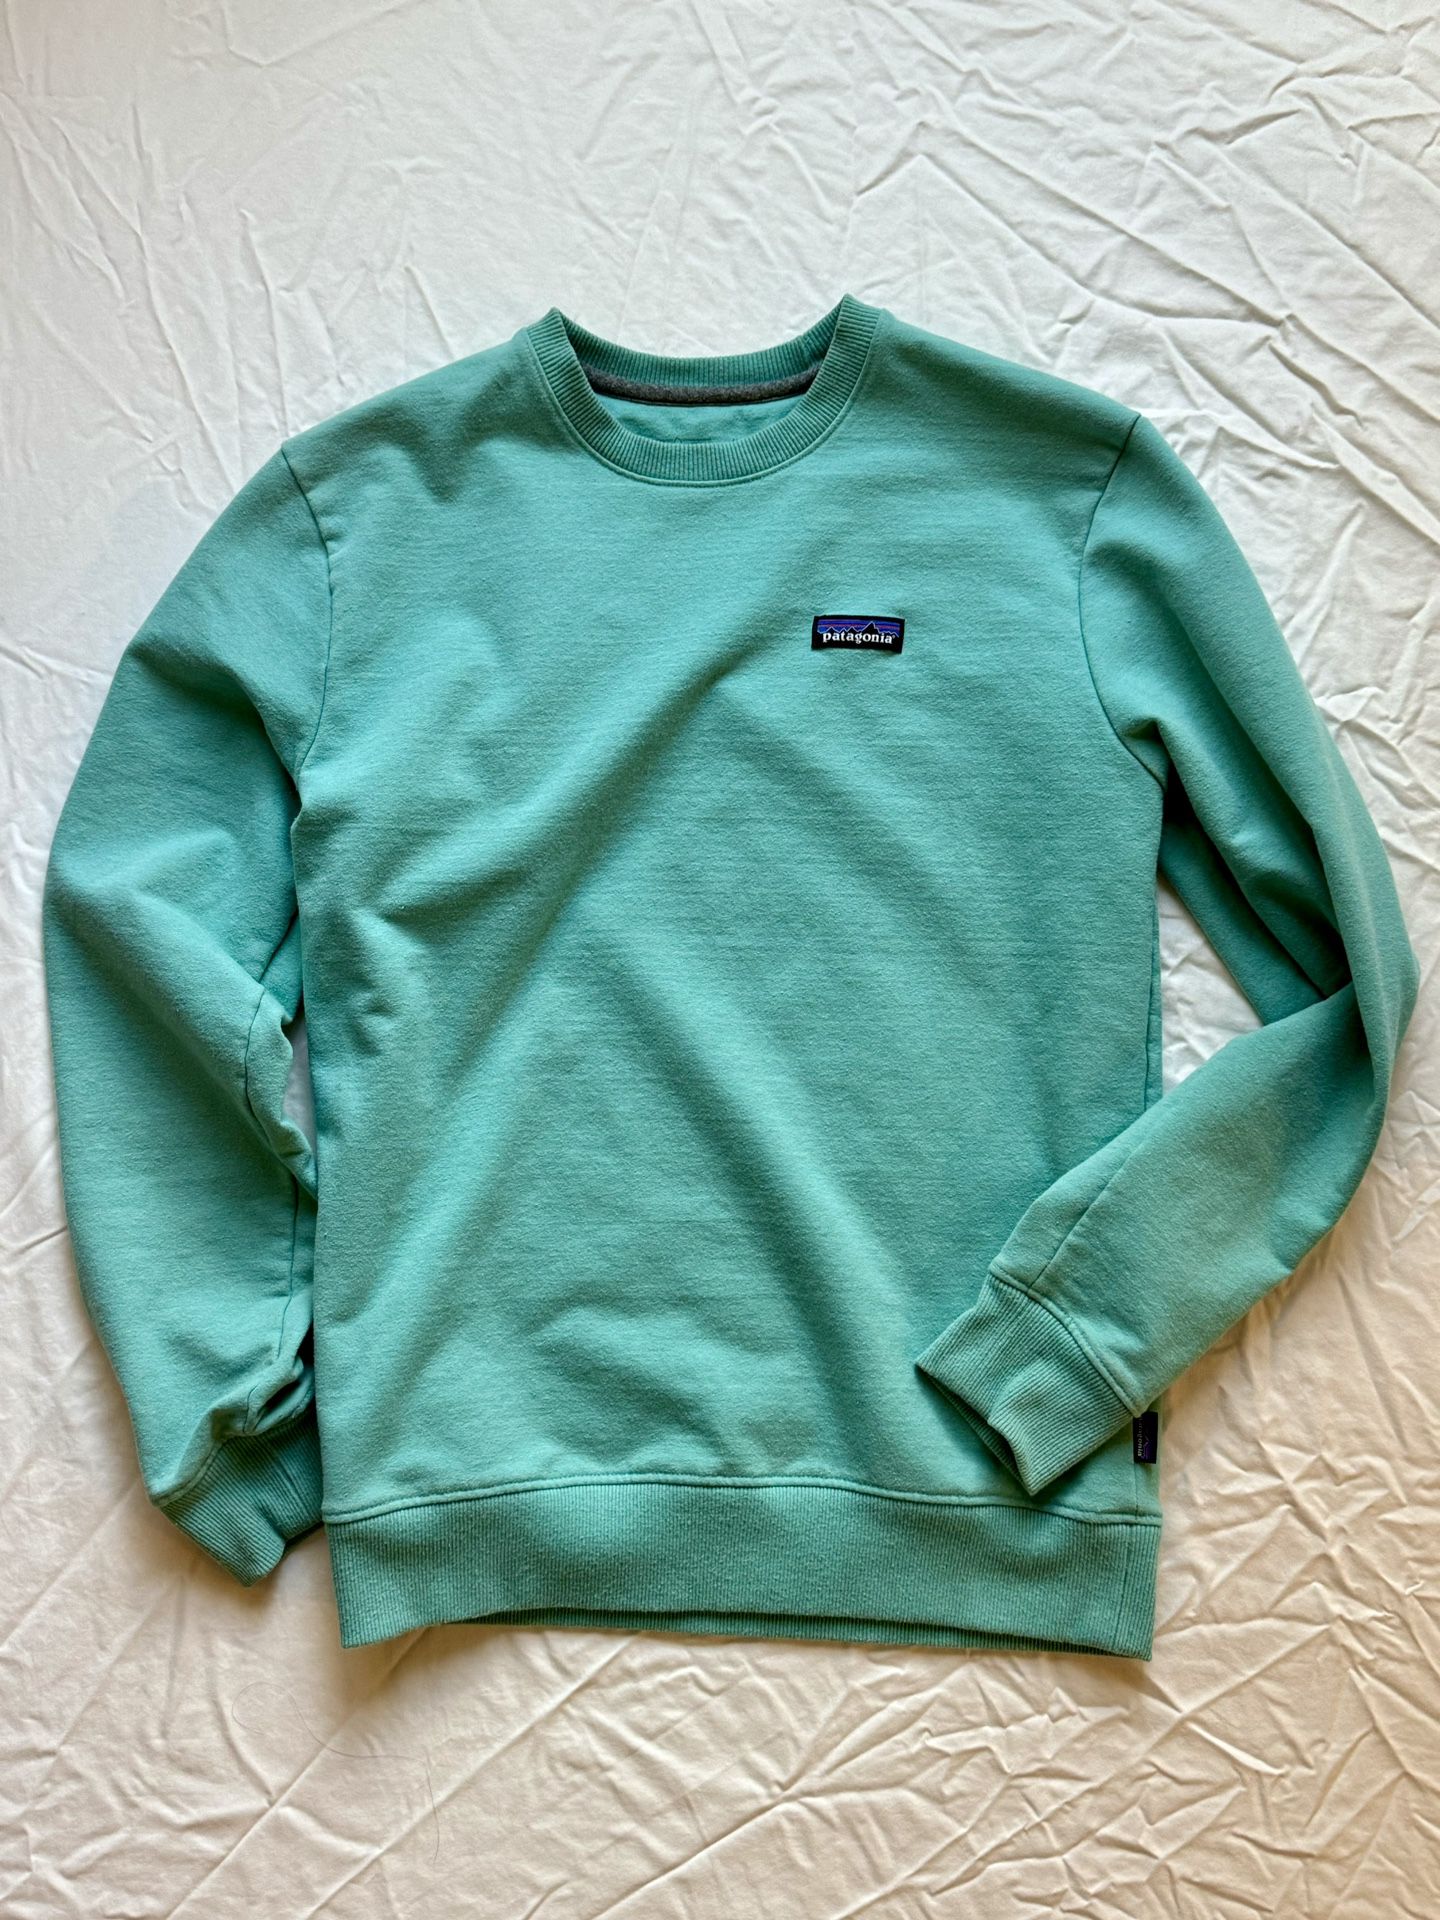 Patagonia Crew Neck Sweatshirt (Small)